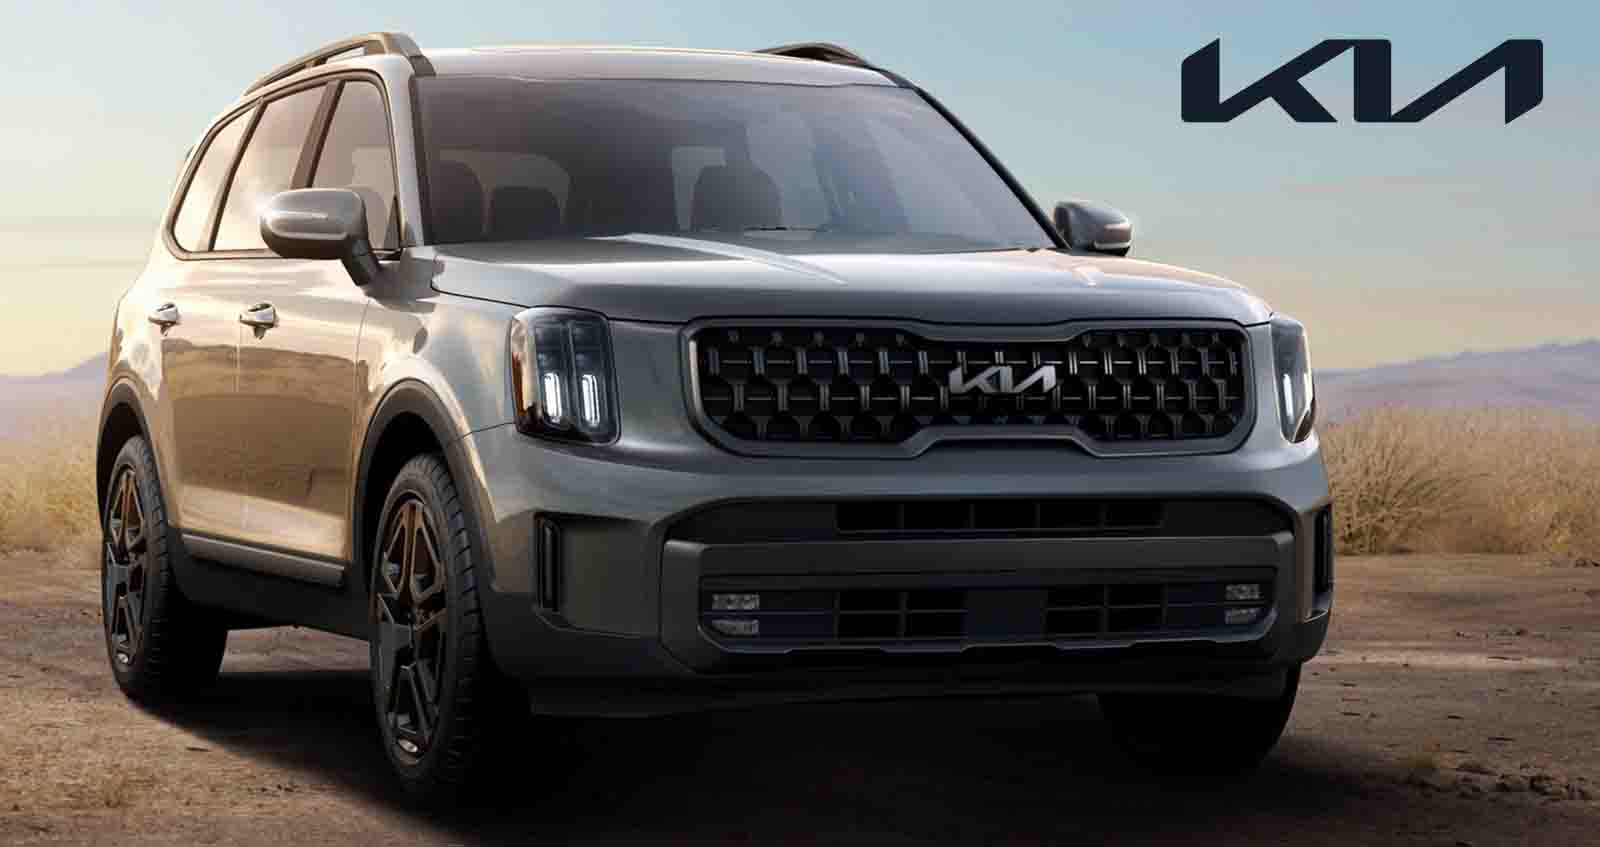 KIA Telluride SUV คันโต ปรับปรุงใหม่ เปิดตัวในงาน New York International Auto Show 2022